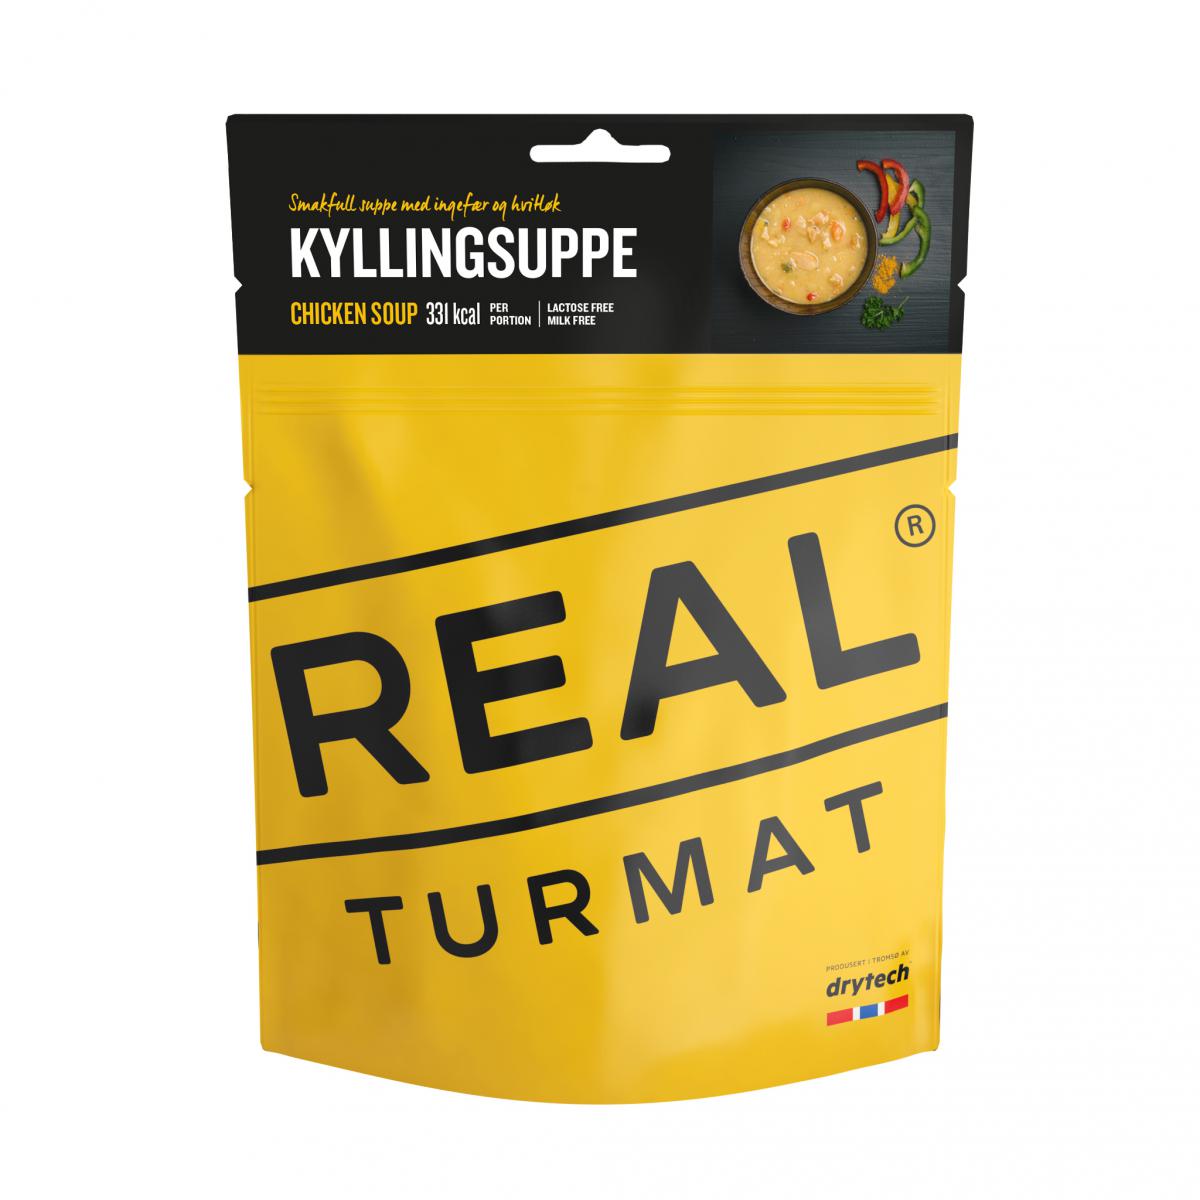 Real Turmat, Kyllingsuppe 370g, Turmat